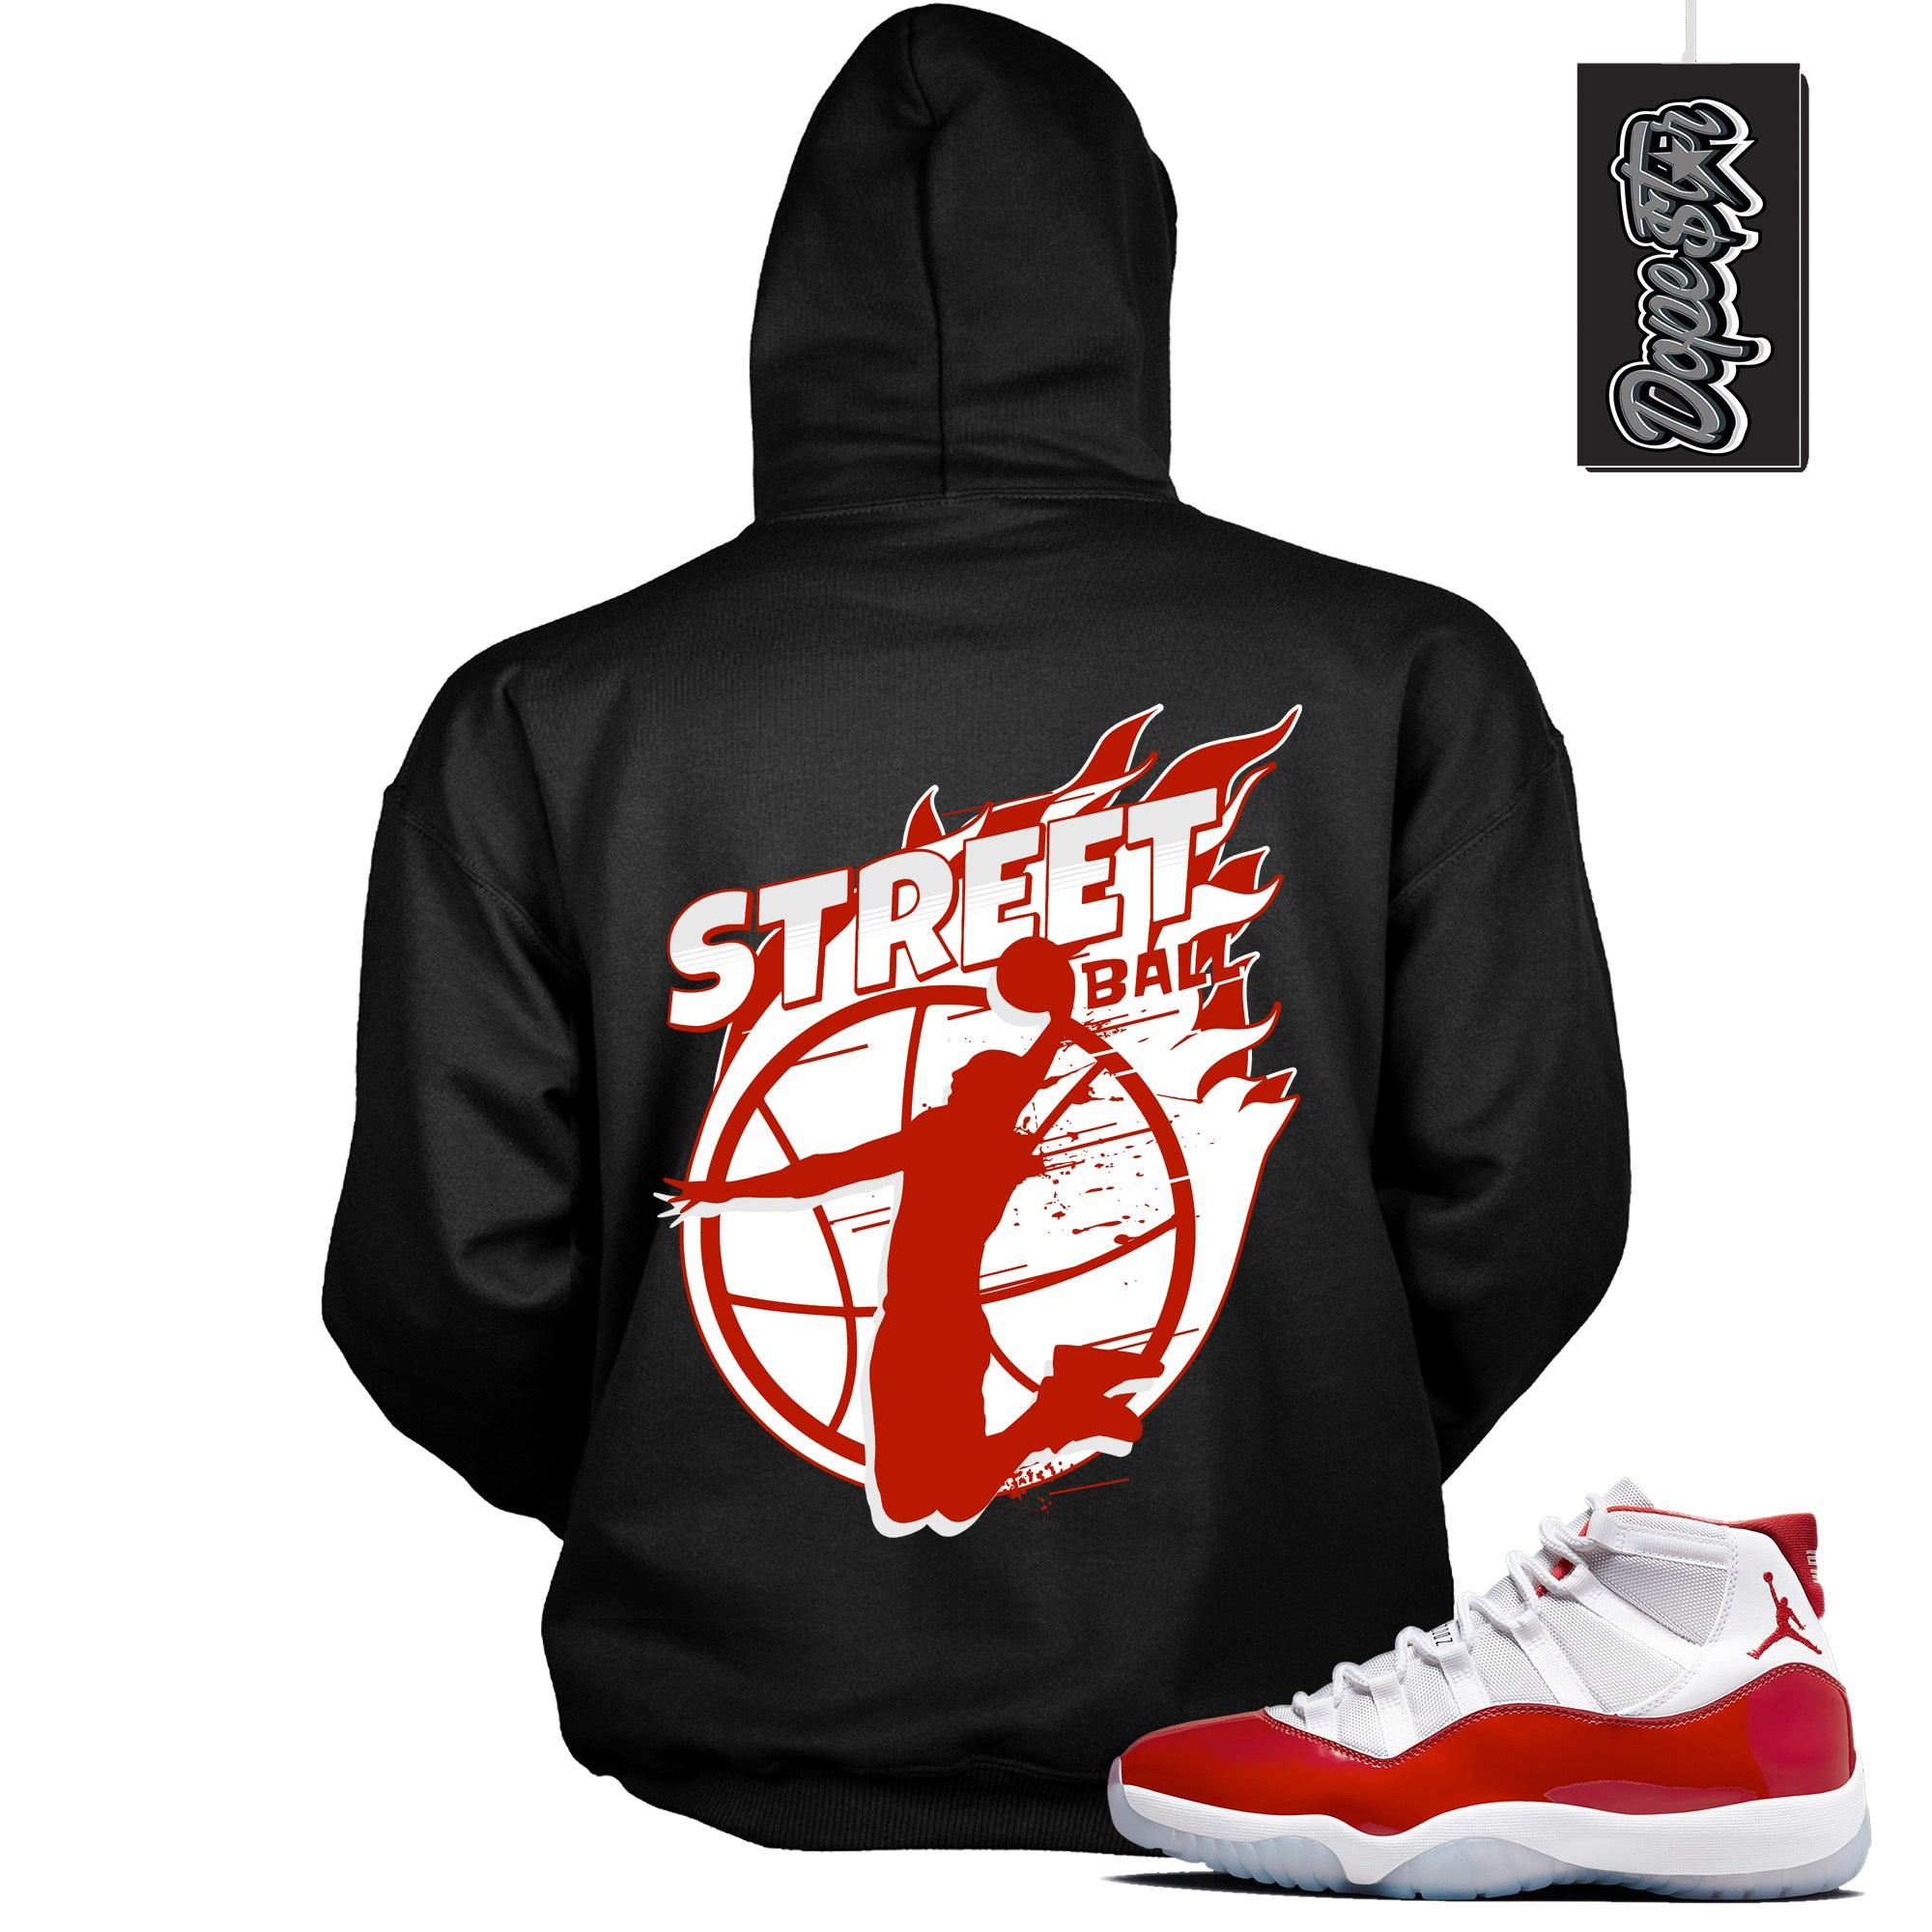 Street Ball Sneaker Sweatshirt Air Jordan 11 Cherry photo